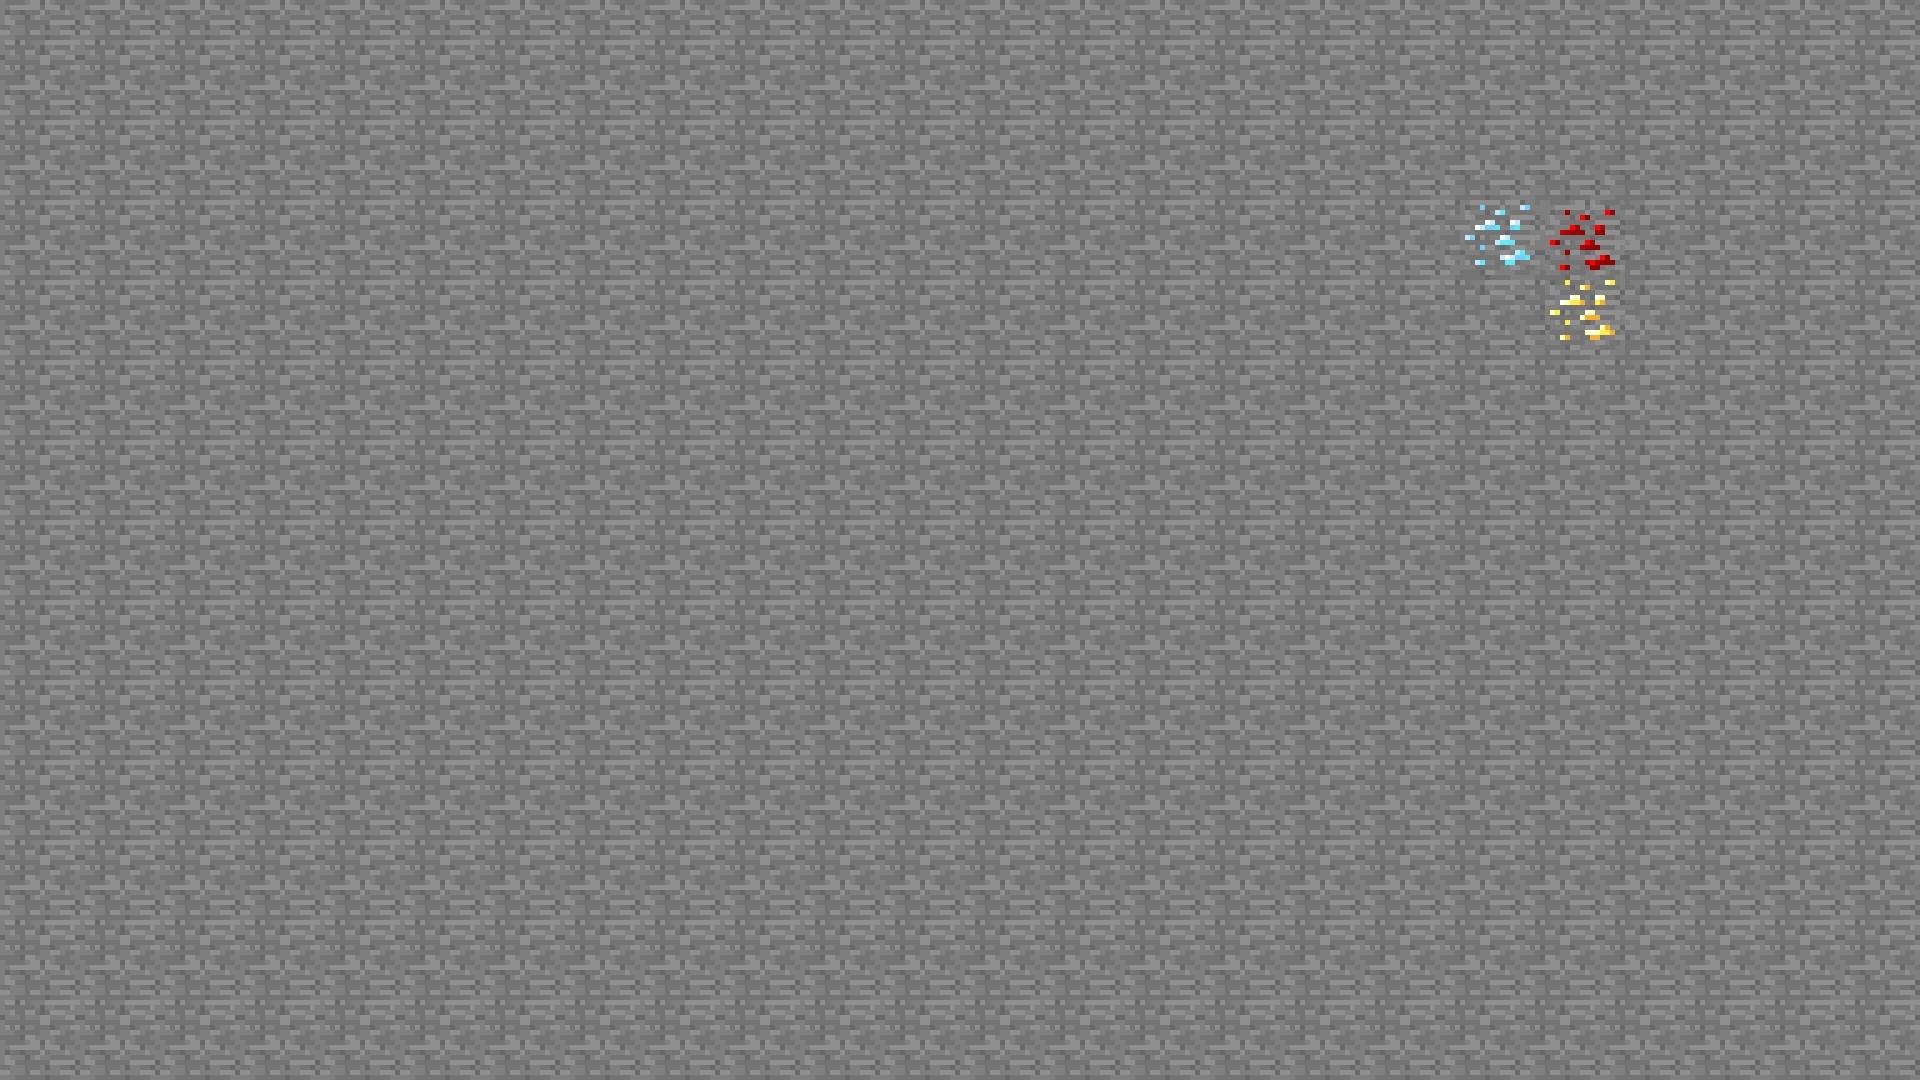 1920x1080 Minecraft Diamond Ore Basic Wallpaper